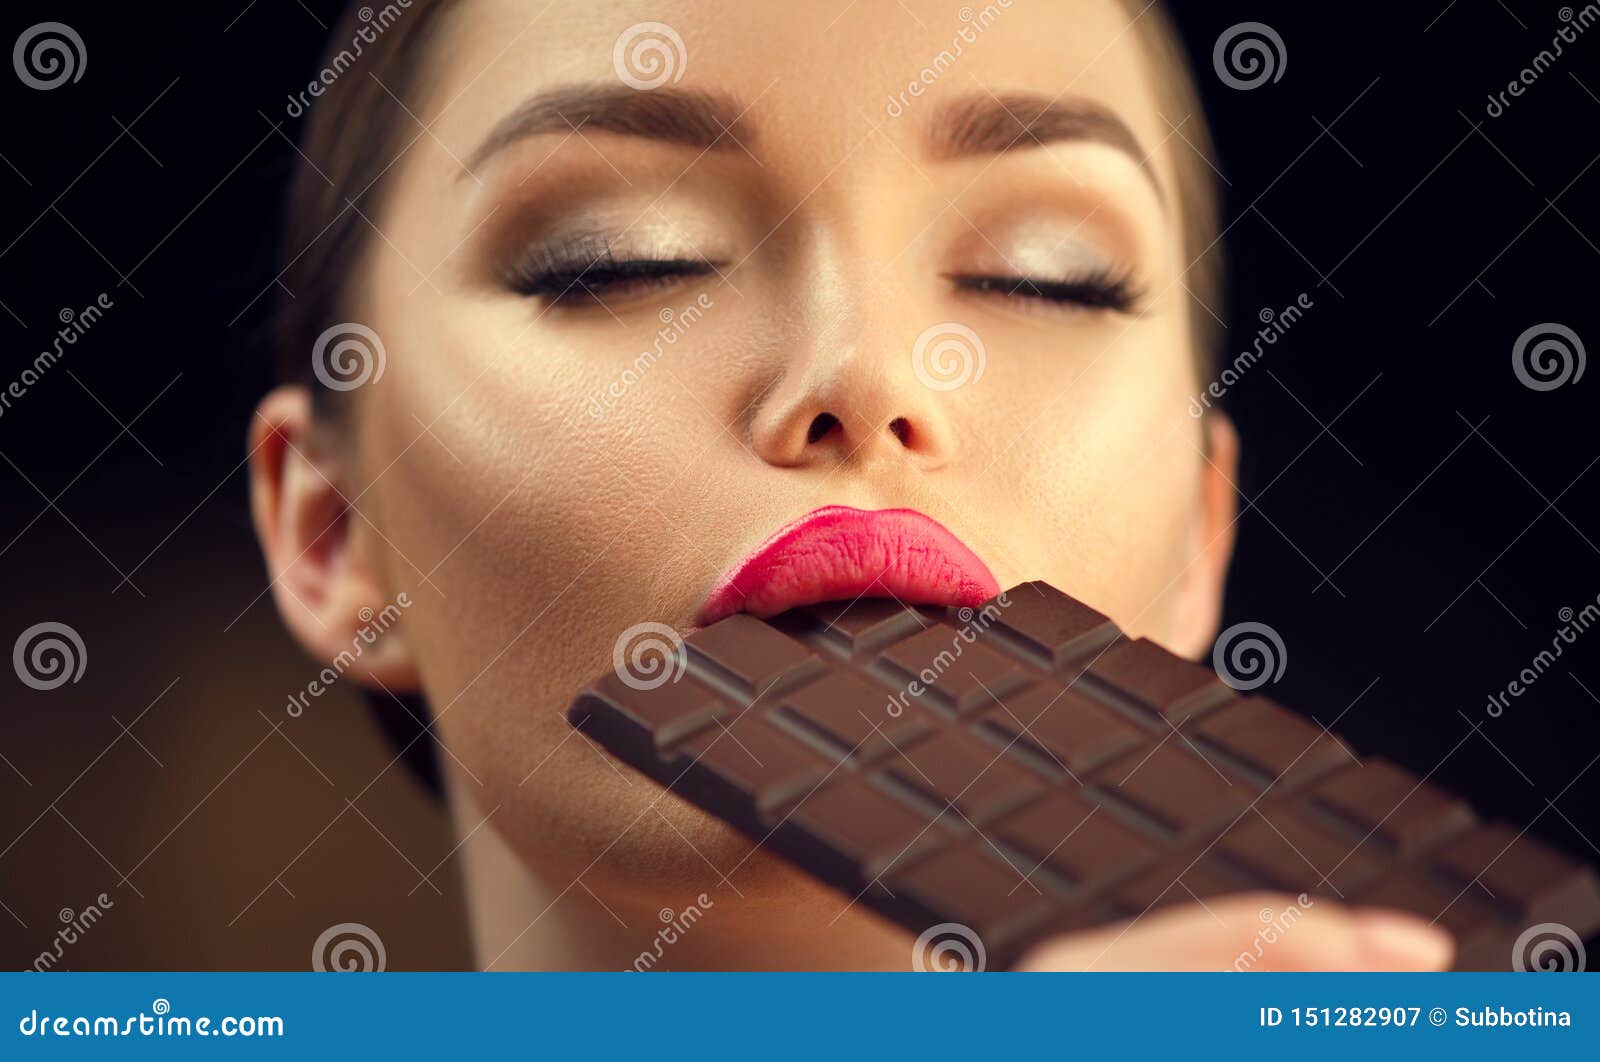 sweet chocolate chick sexy